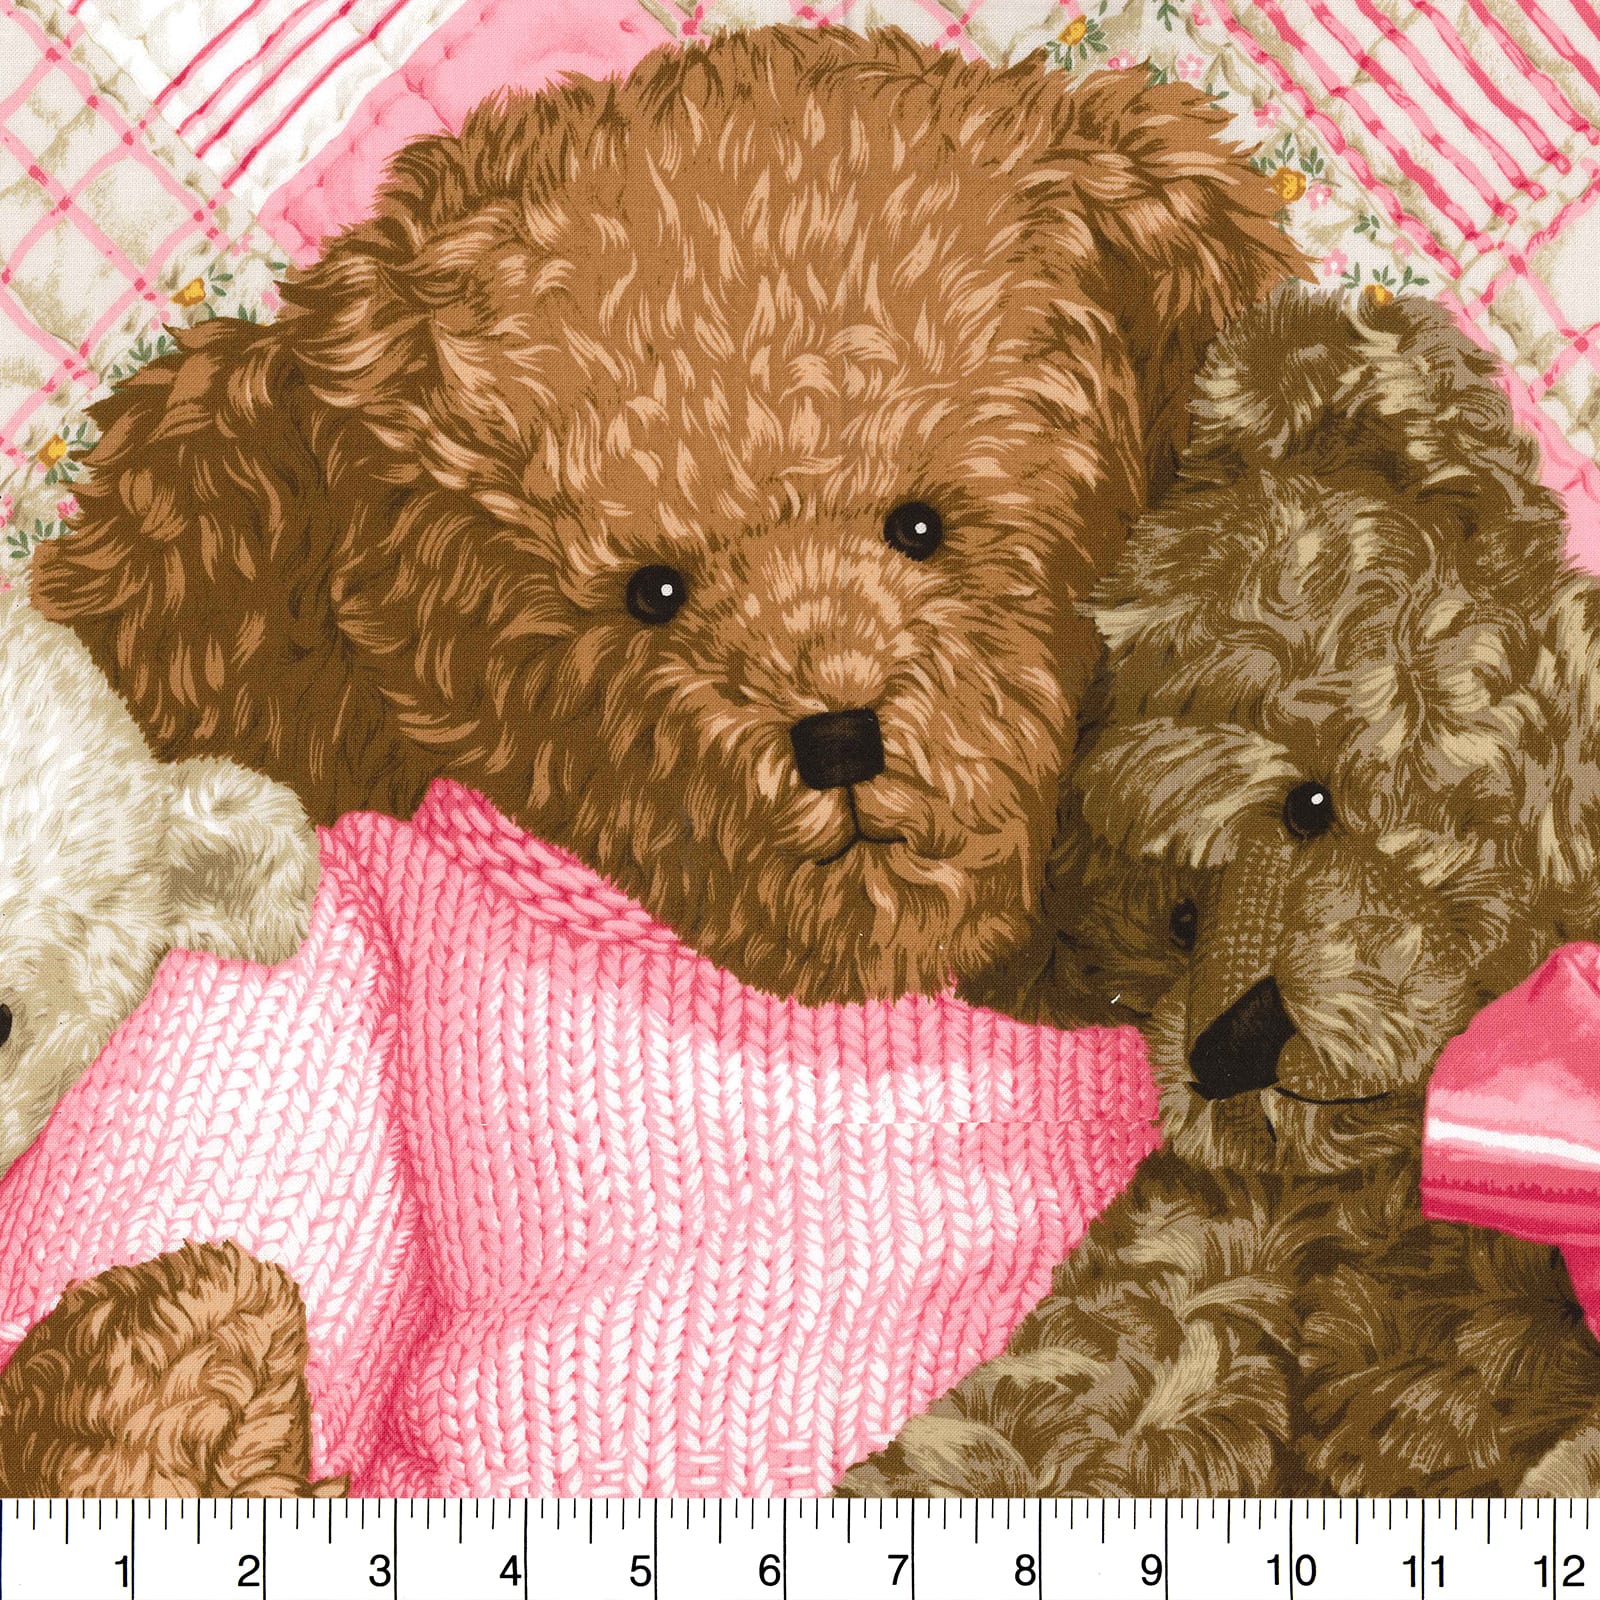 Cotton fabric Christmas quilt panels puppies angels Teddy bears birds U PICK